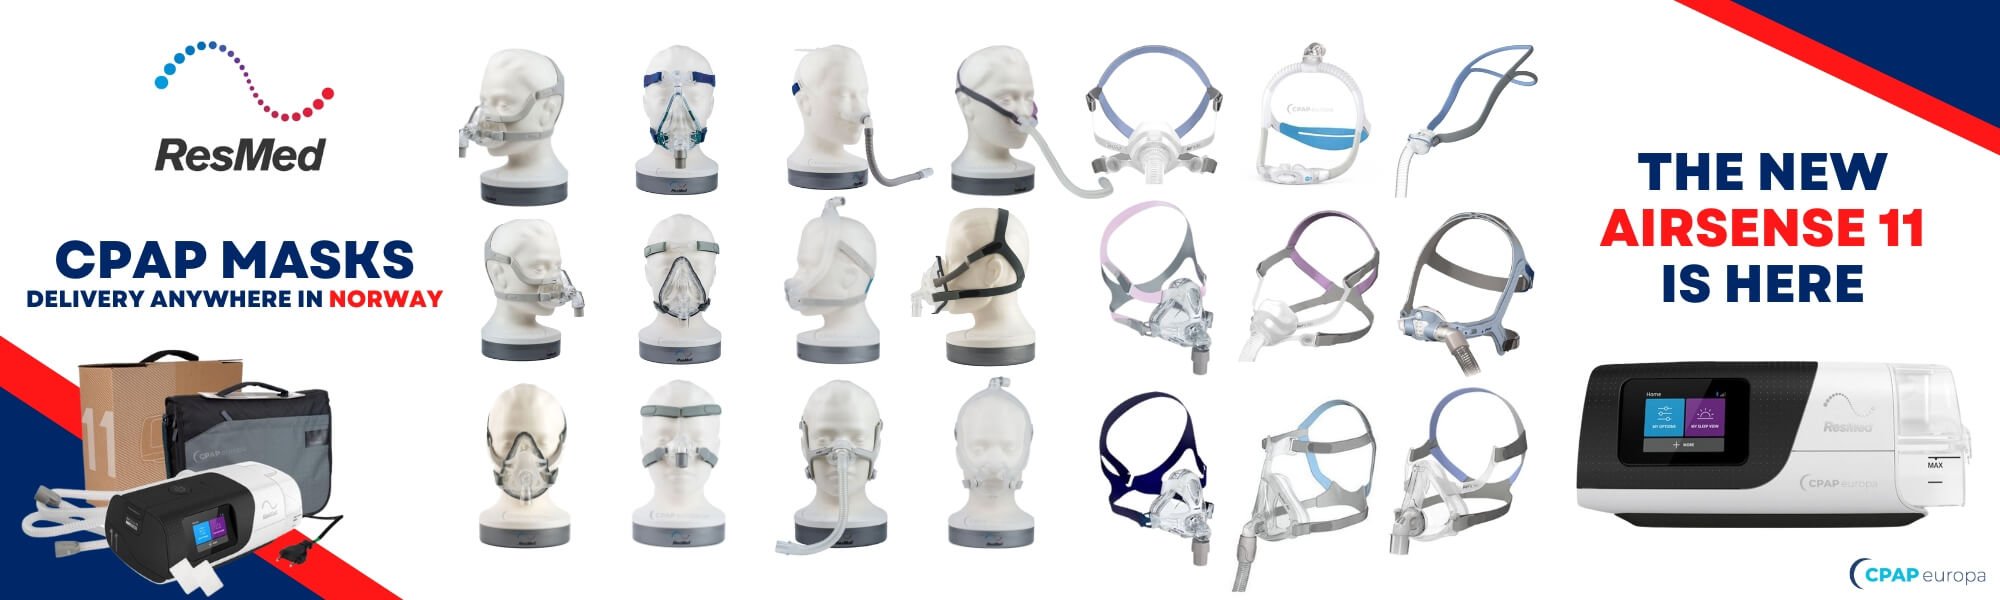 CPAP masks different models - Norway shop (Norge)